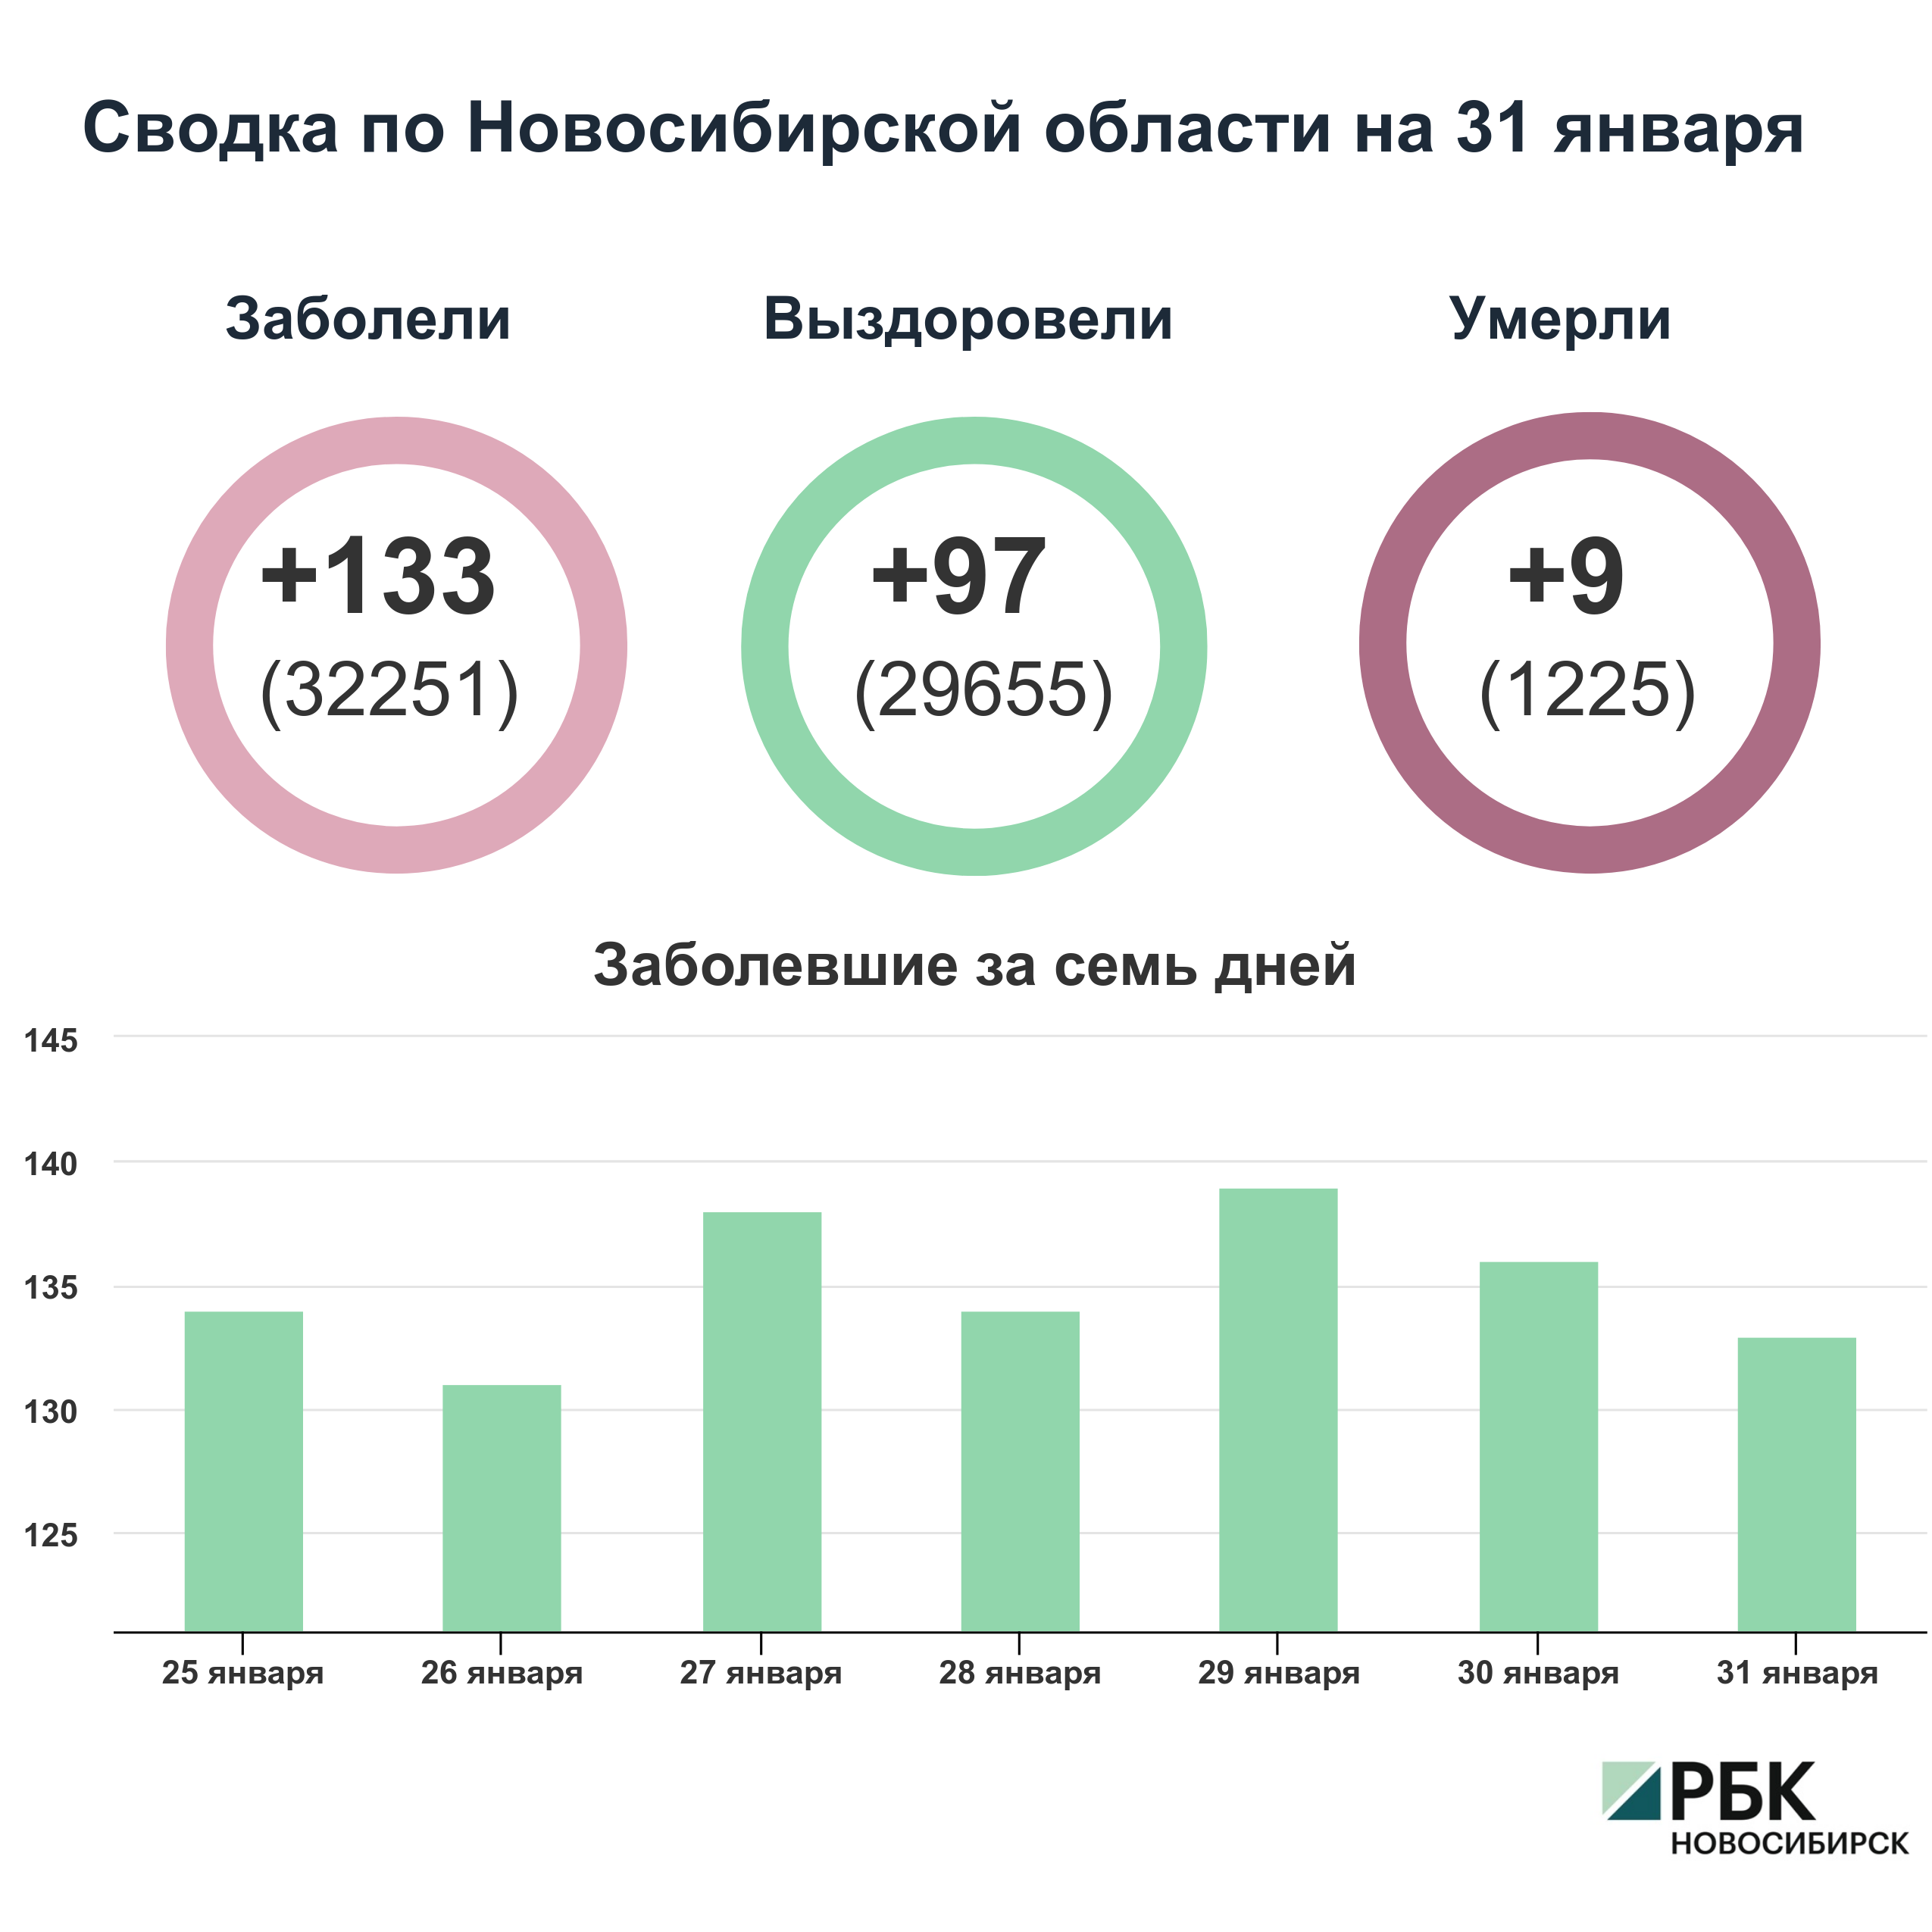 Коронавирус в Новосибирске: сводка на 31 января